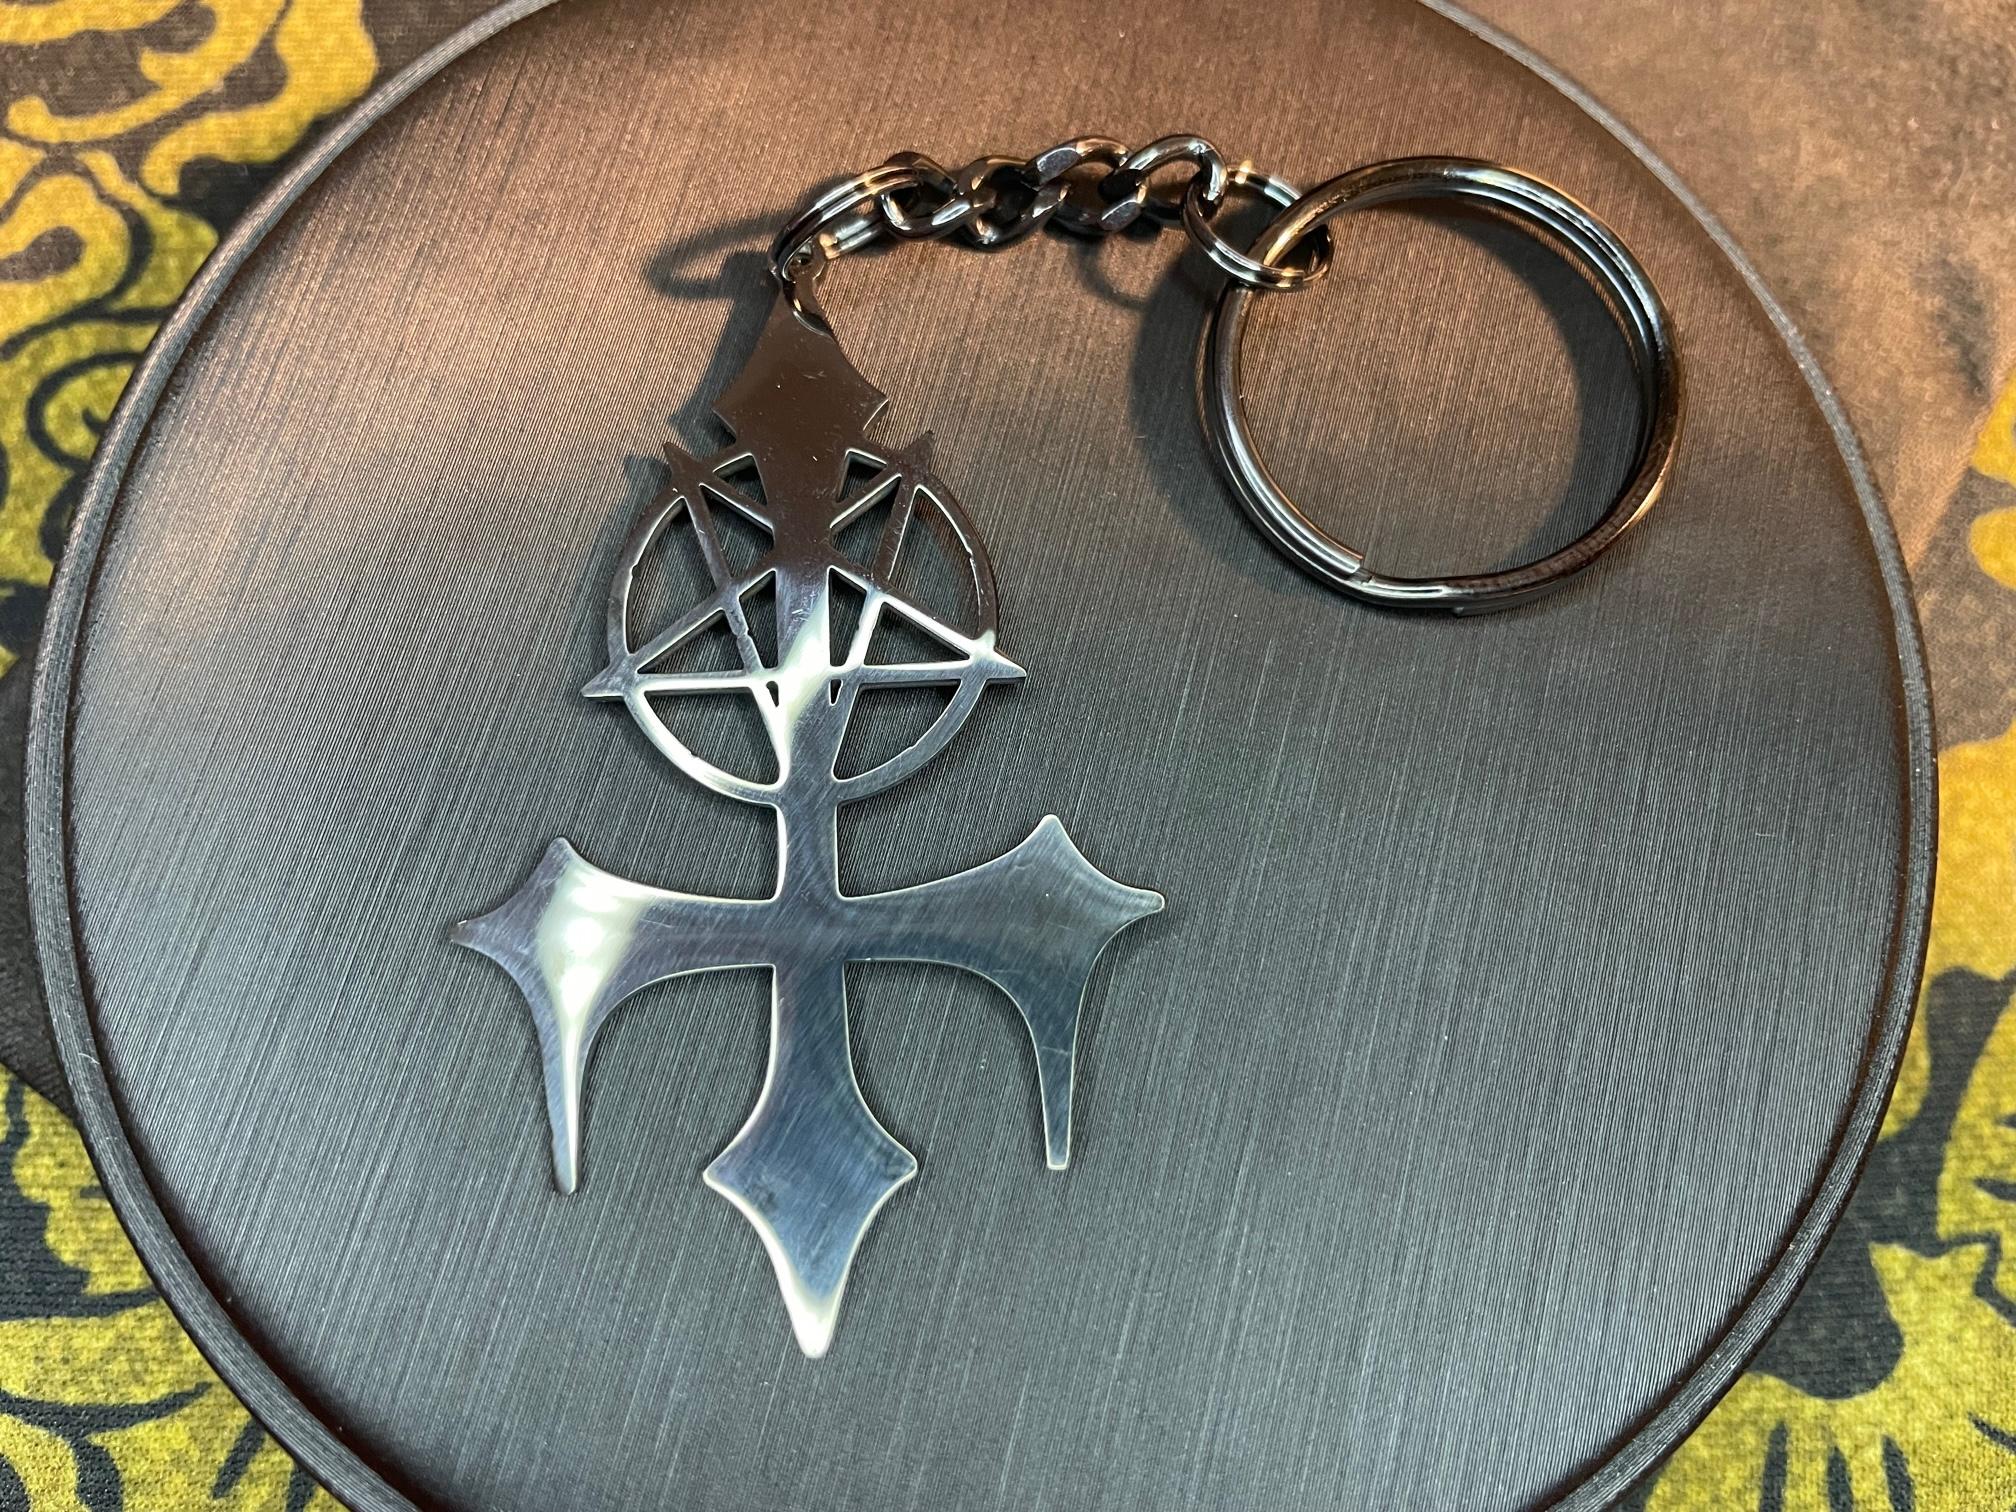 vampire fang upside down saint peter cross inverted pentagram pendant keychain satanic wiccan occult jewelry